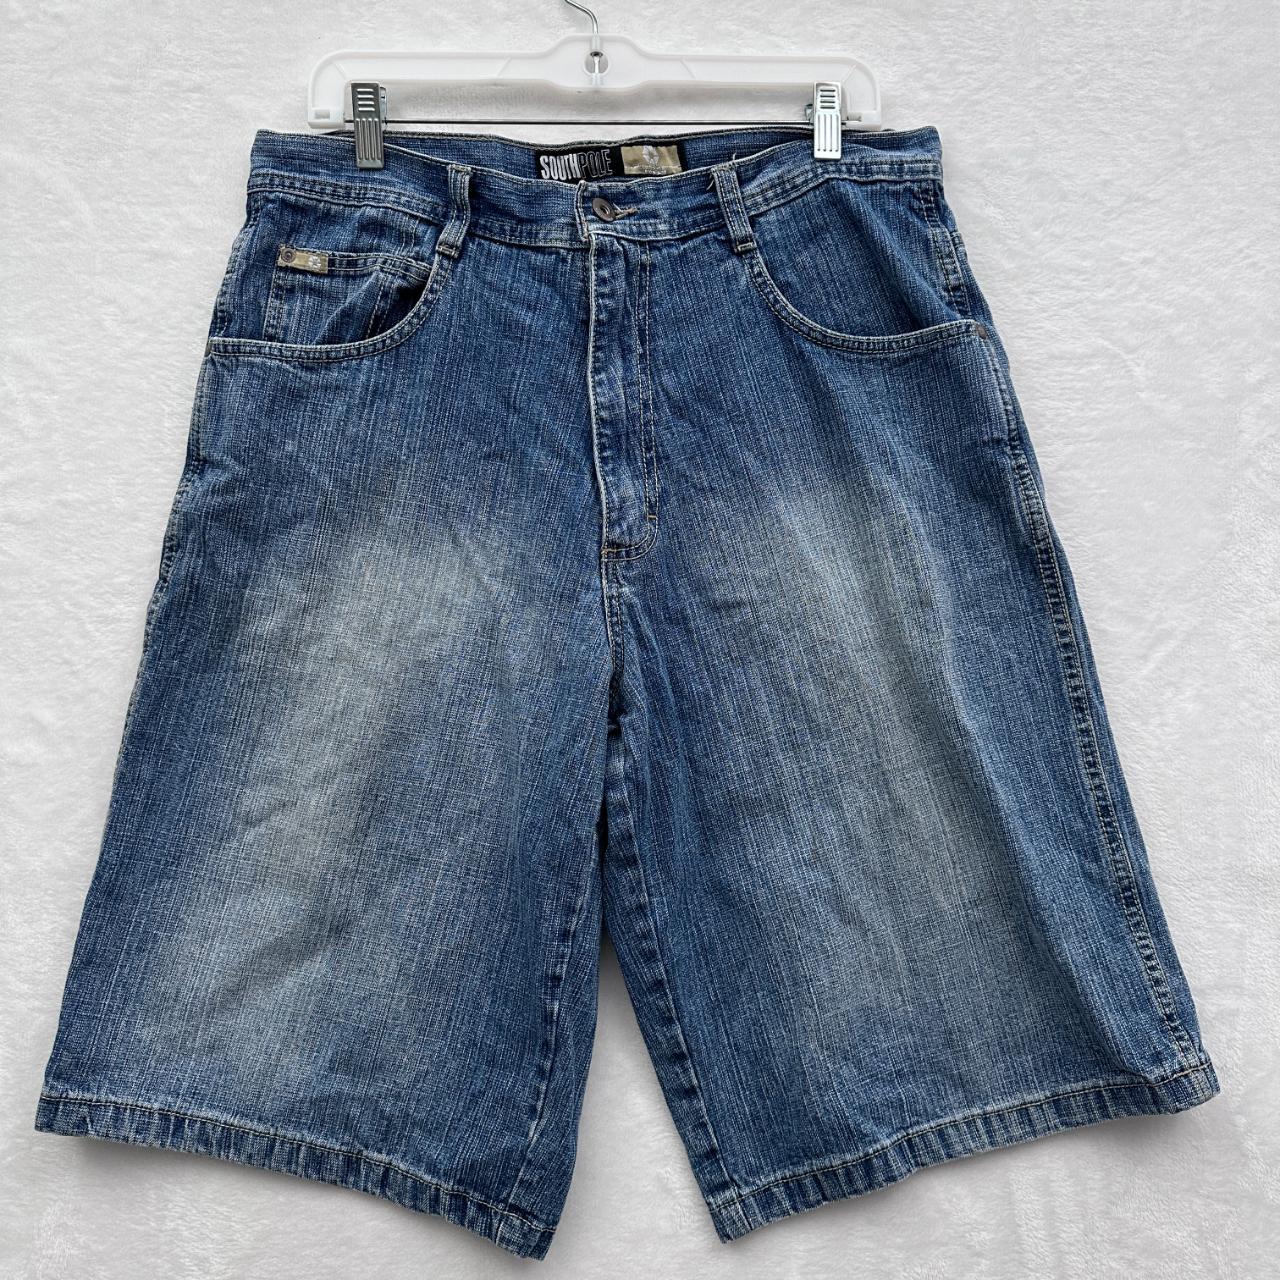 63 South Pole Brand Comfort Denim Blue Jean Shorts Men's Sz 16 Waist 20